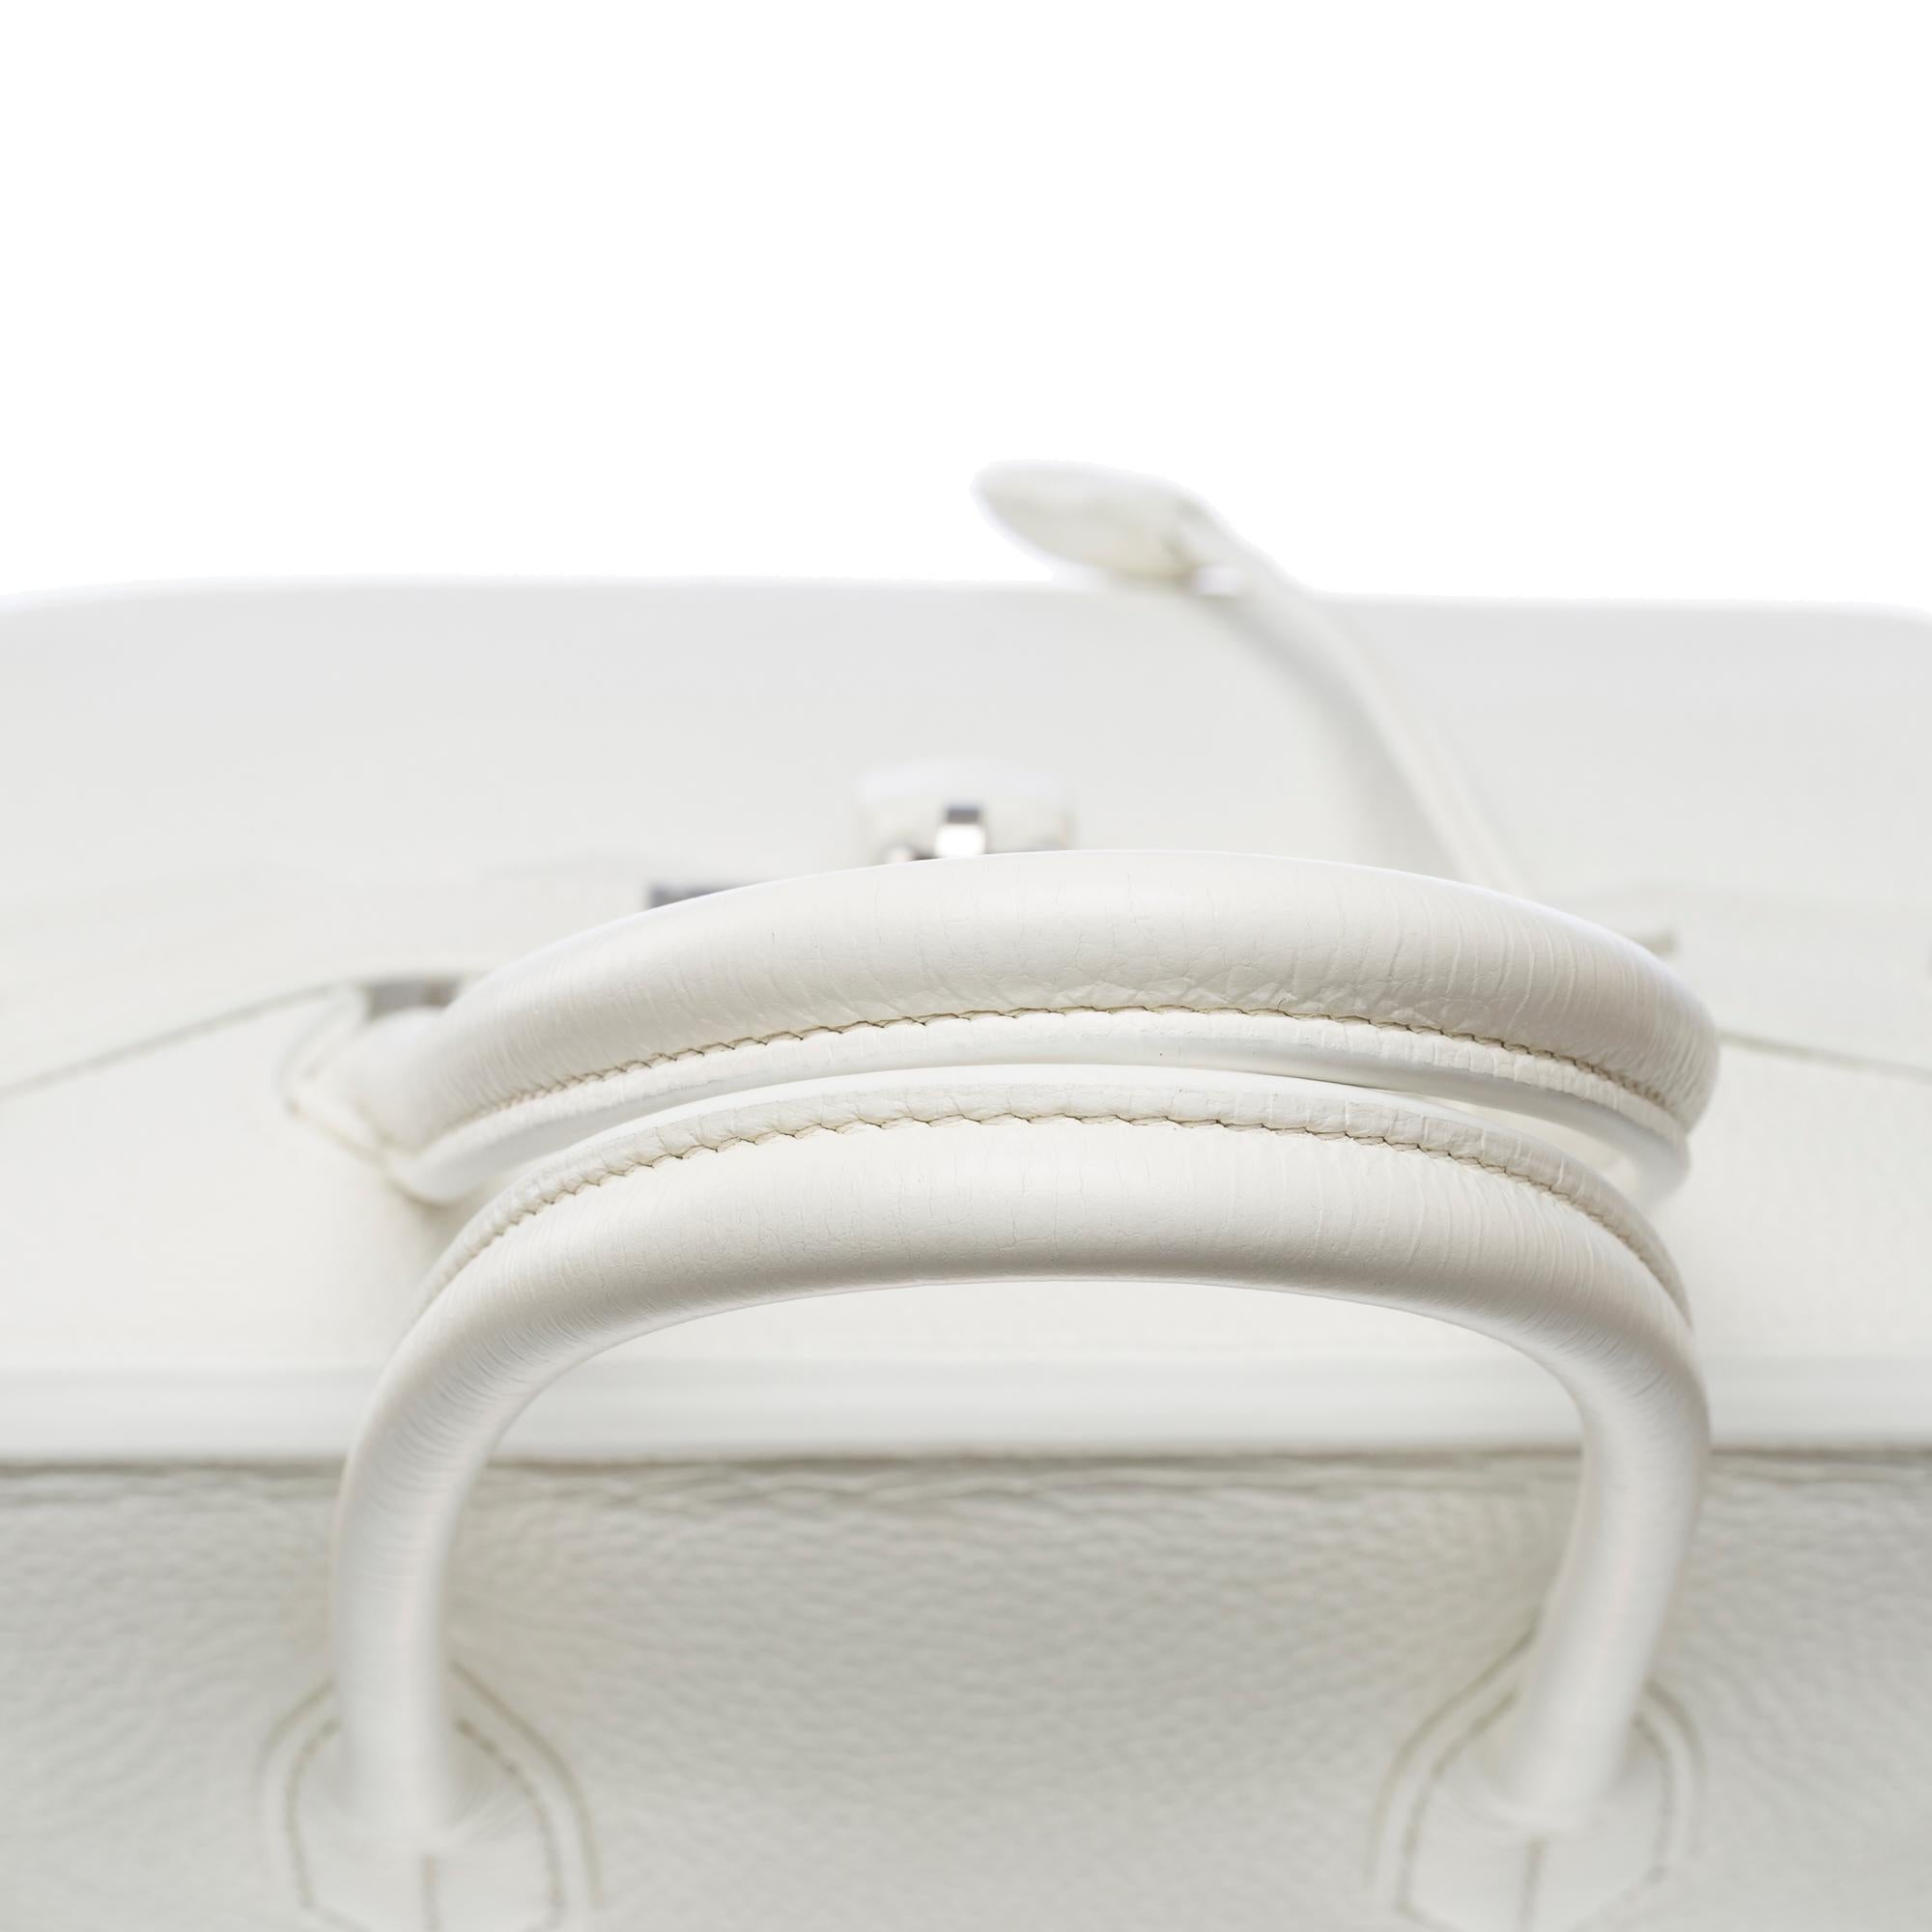 Stunning Hermès Birkin 35 handbag in White Taurillon Clemence leather, SHW 6